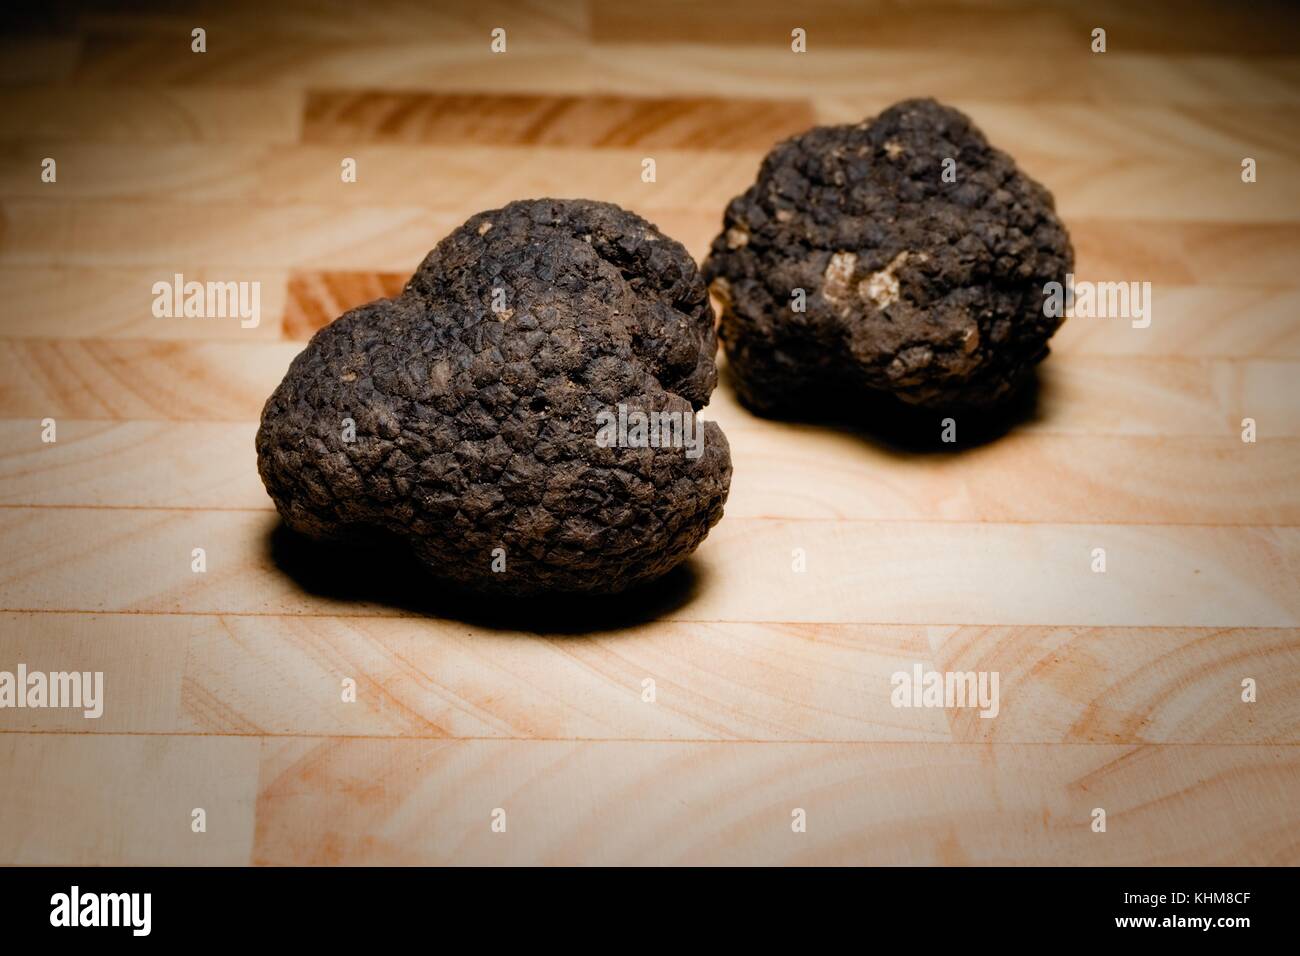 Precious Italian truffles, on a wooden cutting board Stock Photo